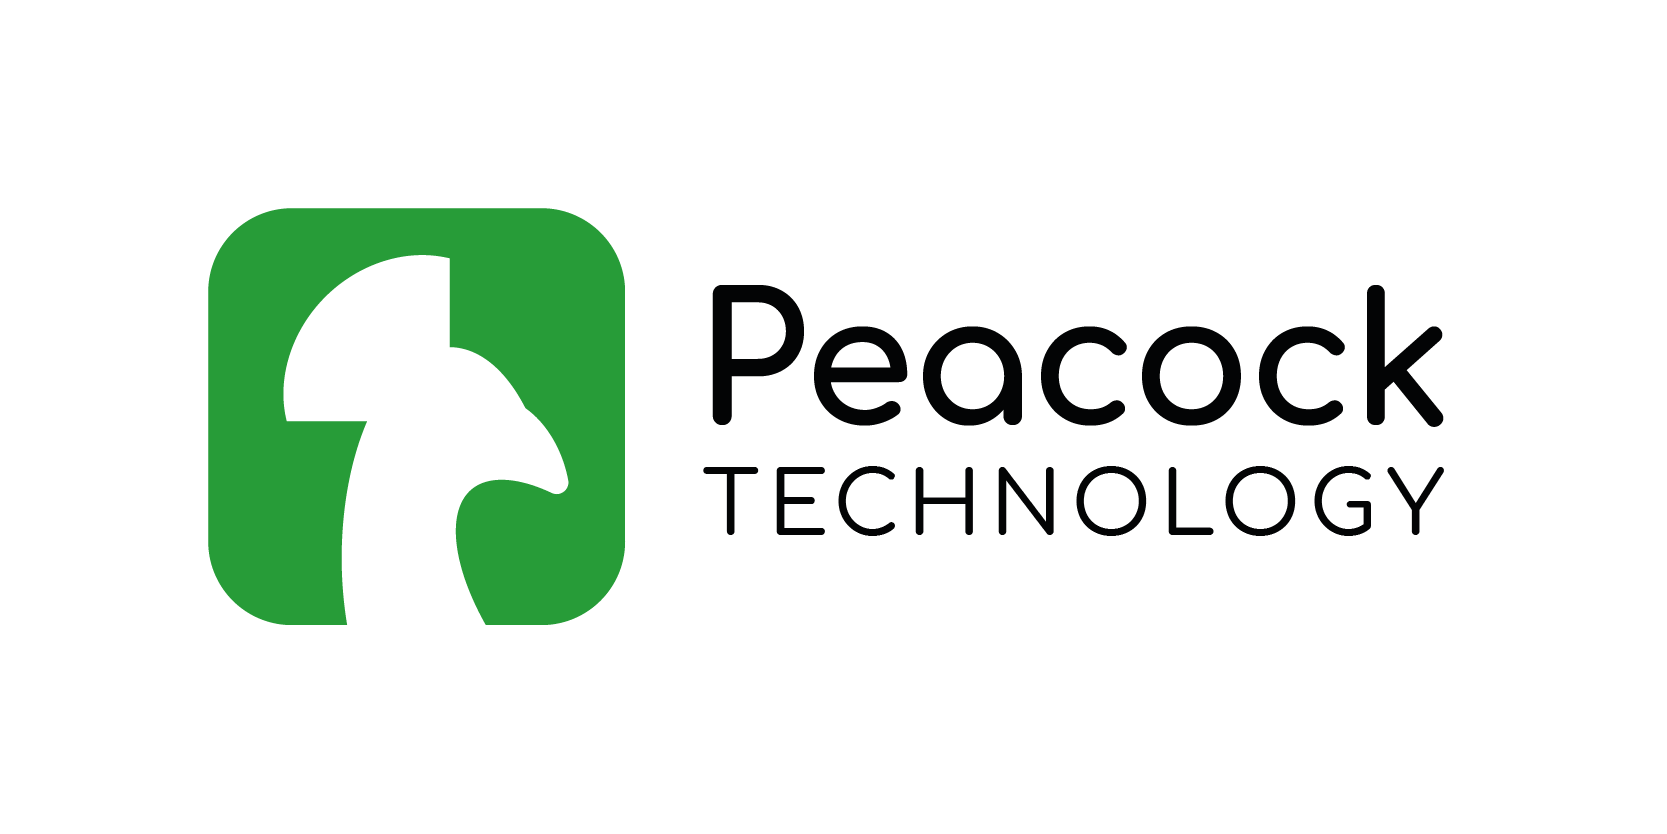 Peacock Technology Ltd